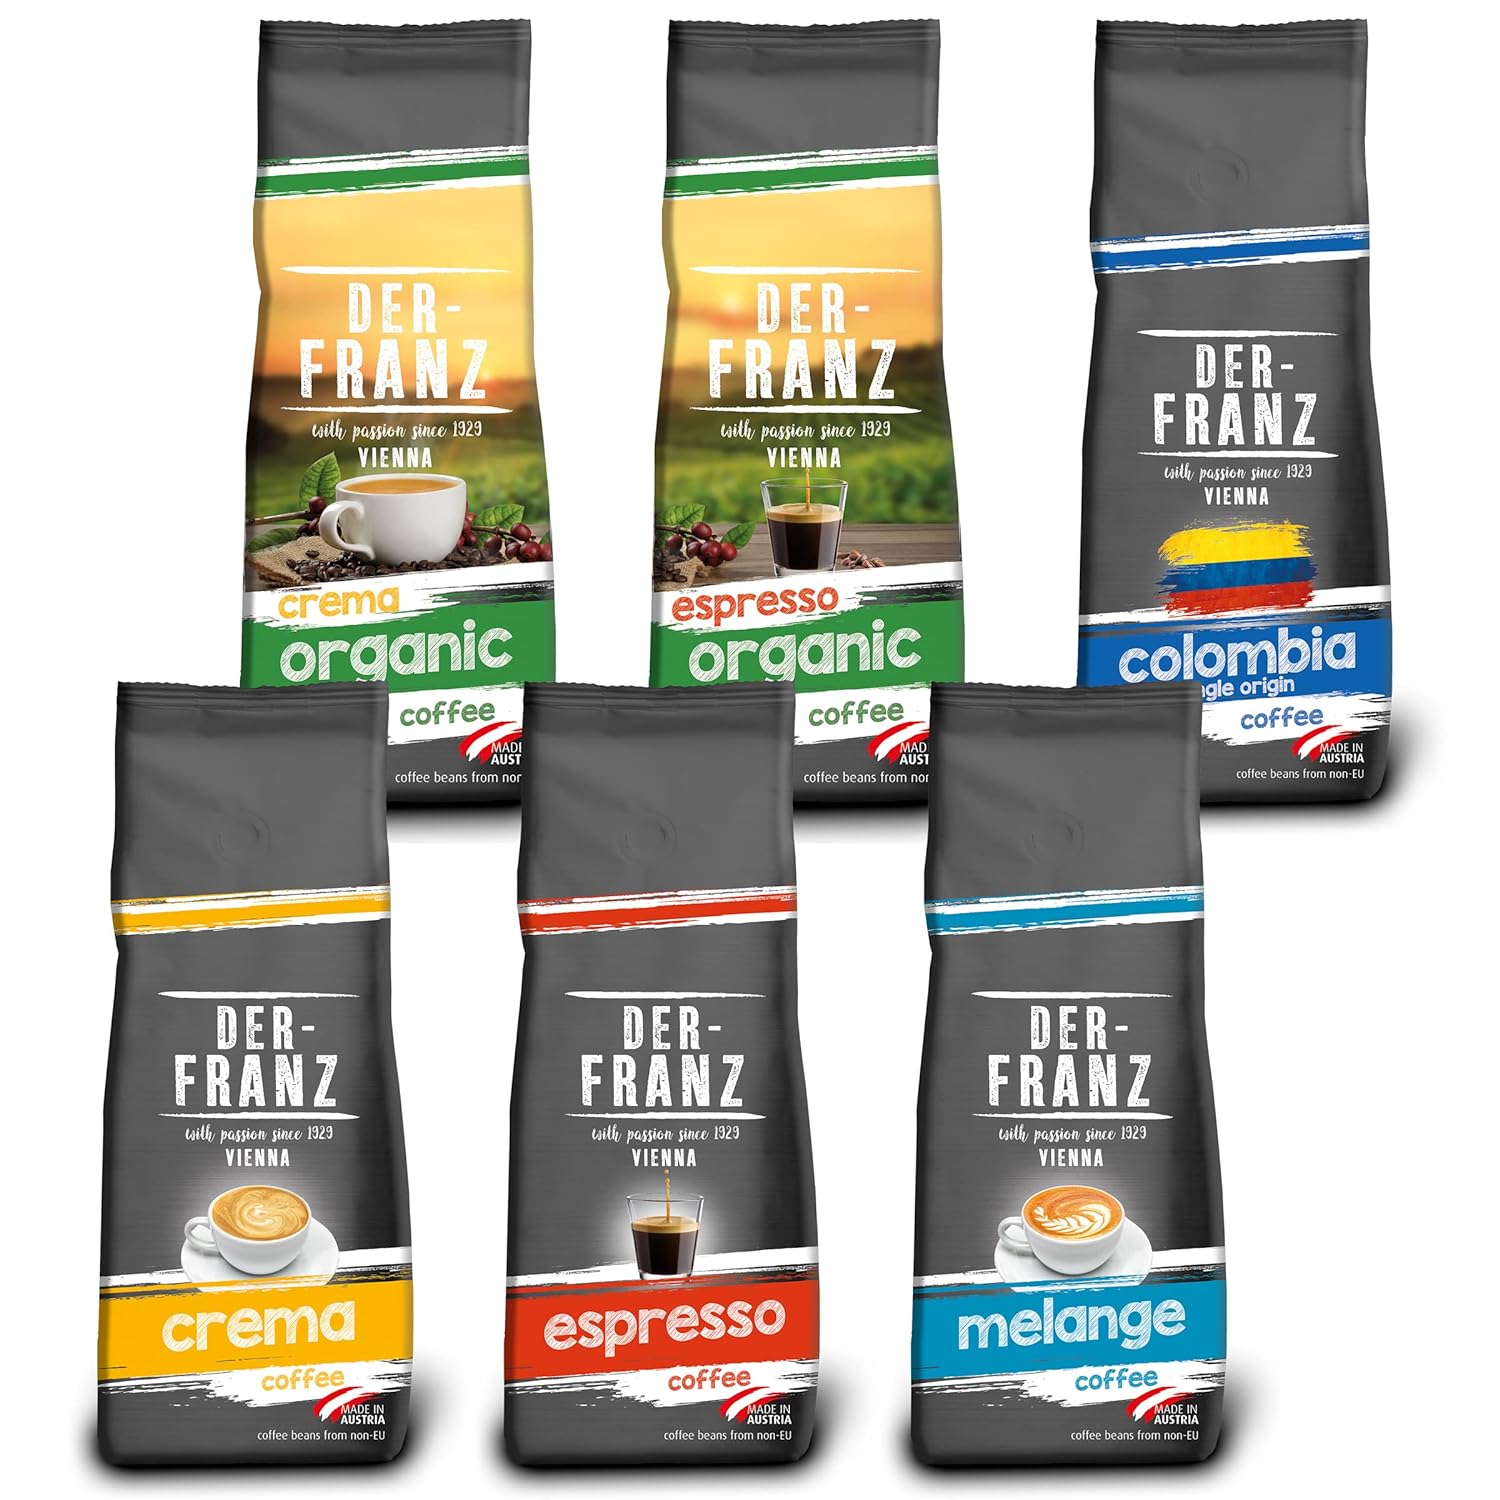 Der-Franz Coffee Pack, Whole Bean, 6 x 500 g (1 x Crema, 1 x Espresso, 1 x Melange, 1 x Colombia, 1 x Espresso Organic, 1 x Crema Organic)